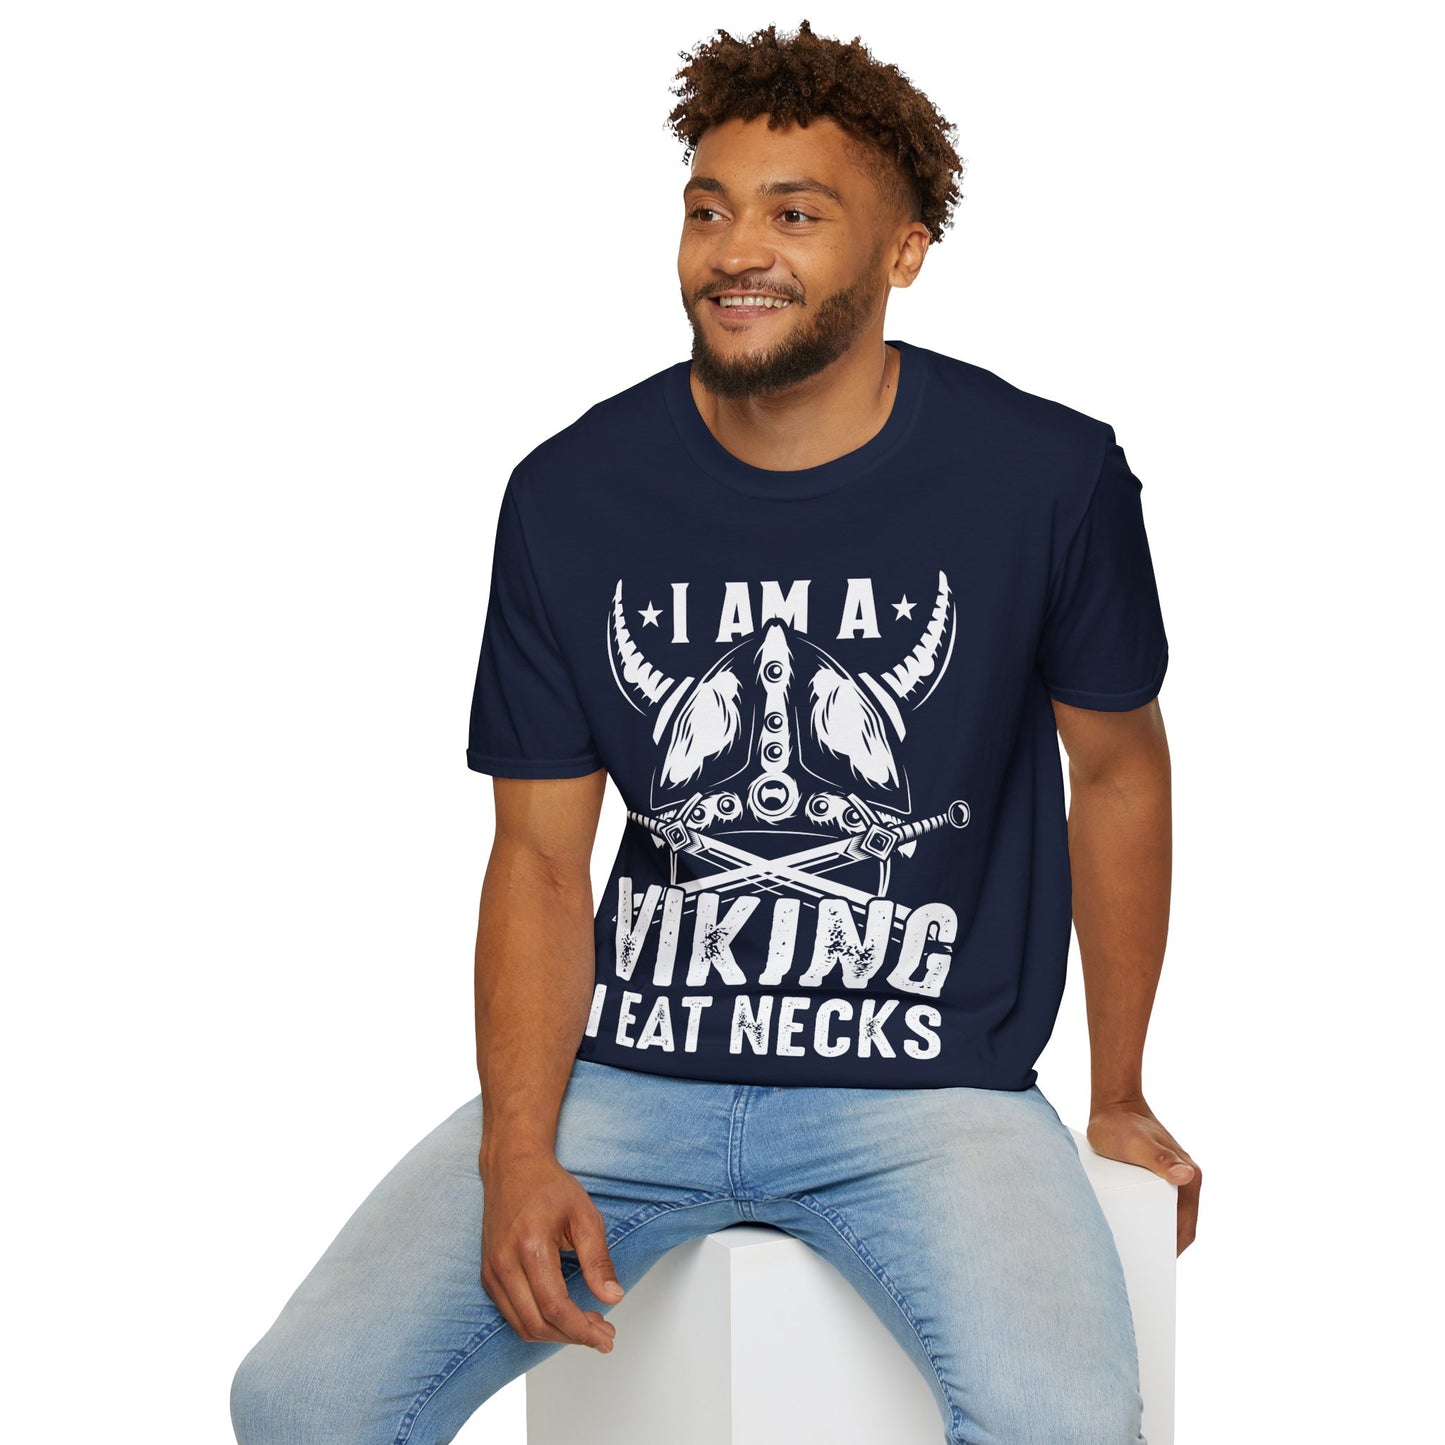 I Am A Viking I Eat Necks T-Shirt